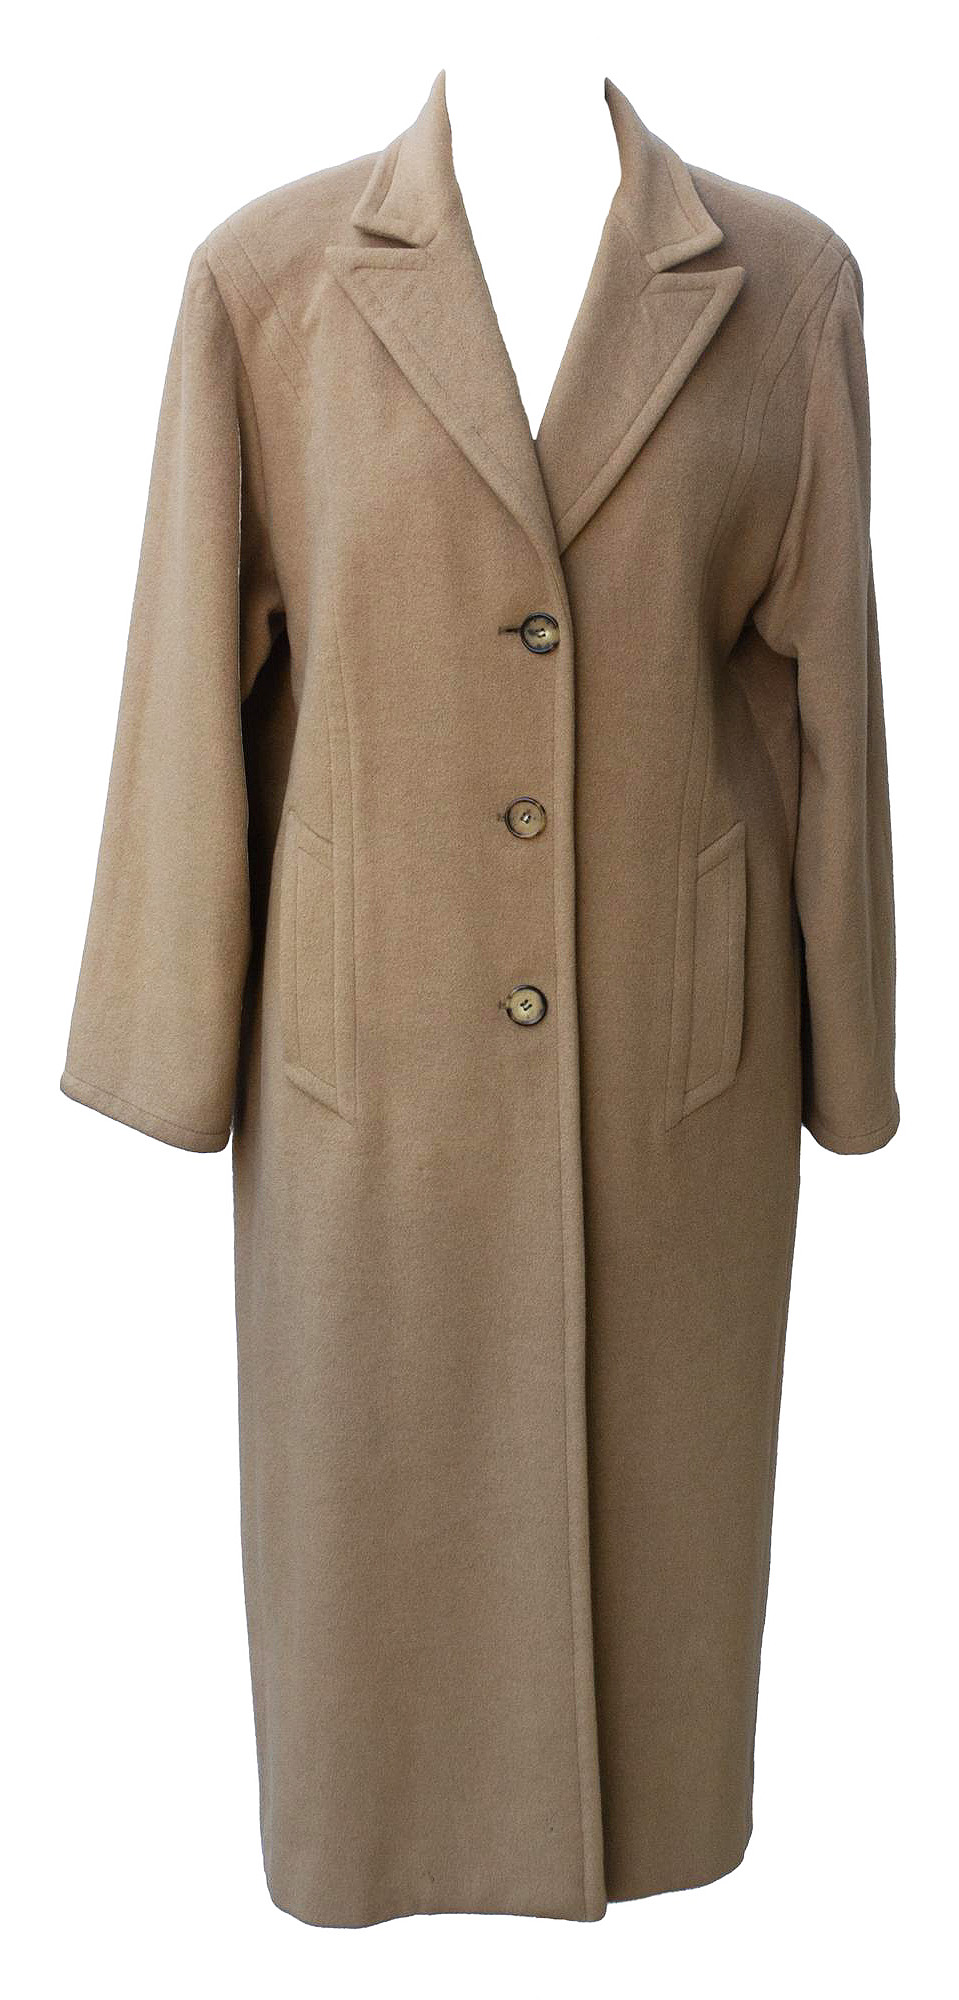 Hermes CAMEL COAT Description: Camelhair fabric for this long lined coat. V...